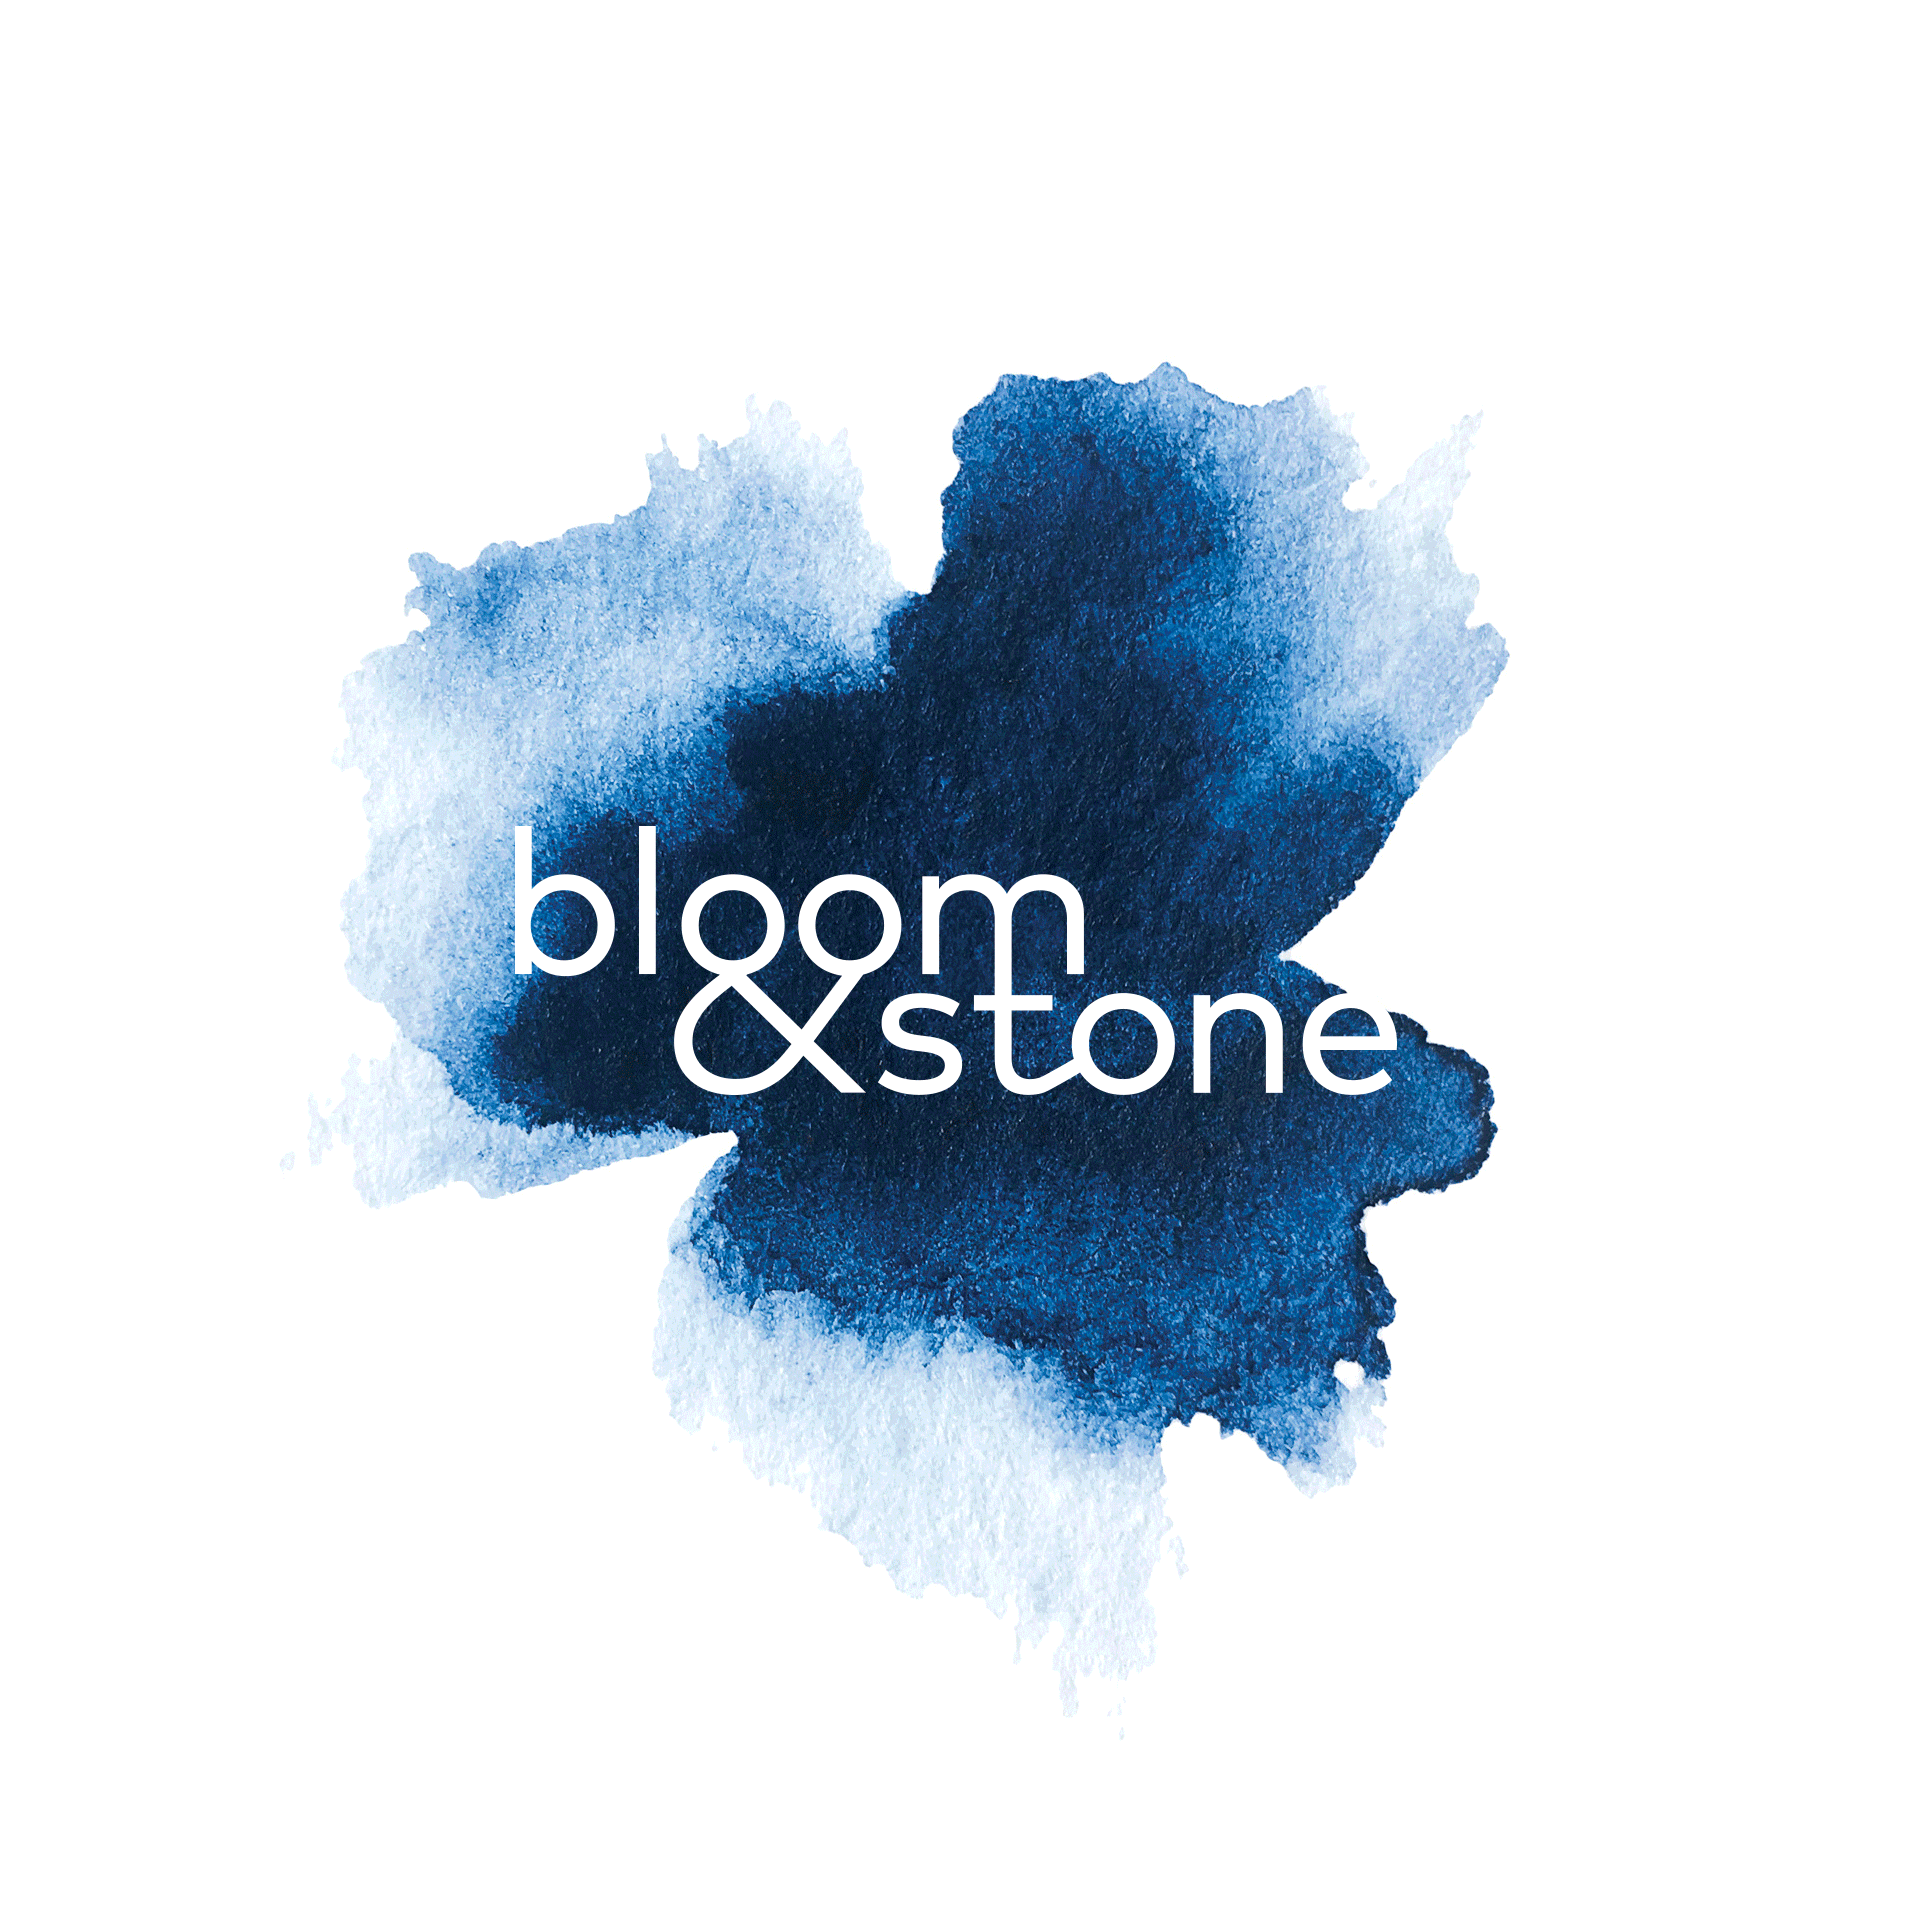 Bloom & Stone logo variations